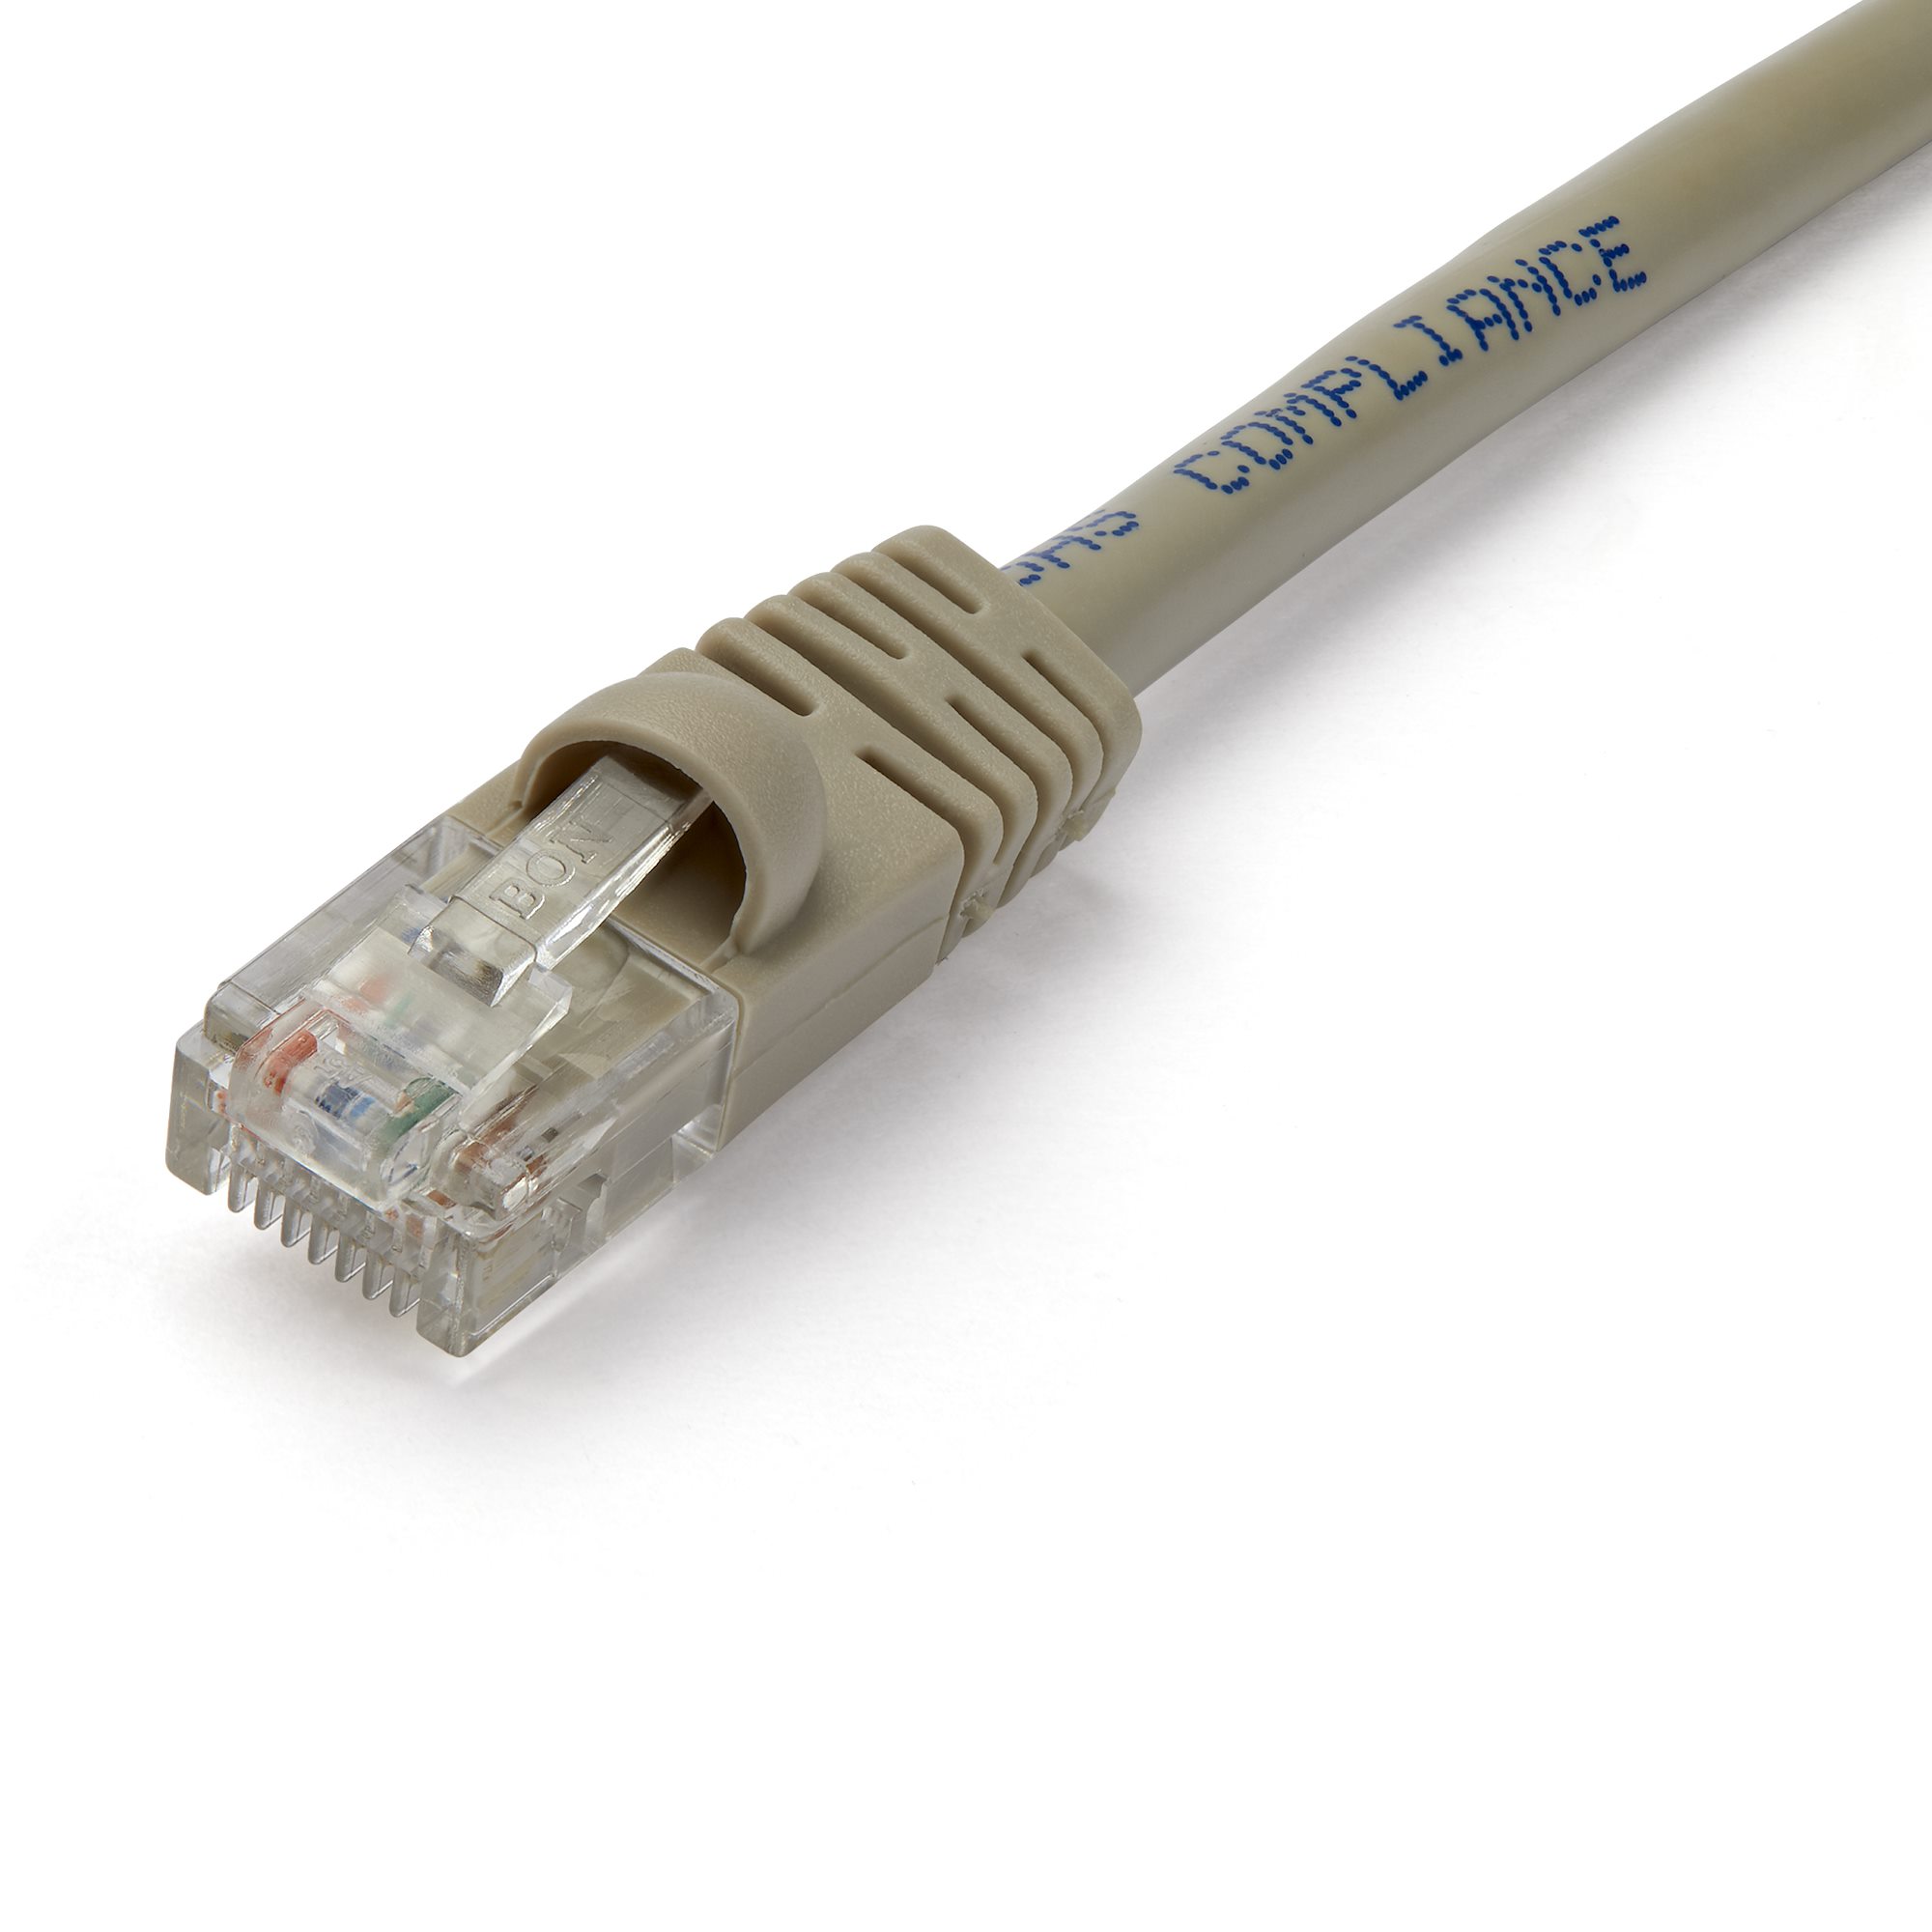 LAN Splitter, LAN Splitter 1 to 2 LAN Cable Splitter Ethernet Splitter LAN  Distributor, Network Splitter 1 to 2, LAN Switch 2 Port, Network Splitter -  (2 Splitters + 10 RJ45 Connectors) : : Computer & Accessories